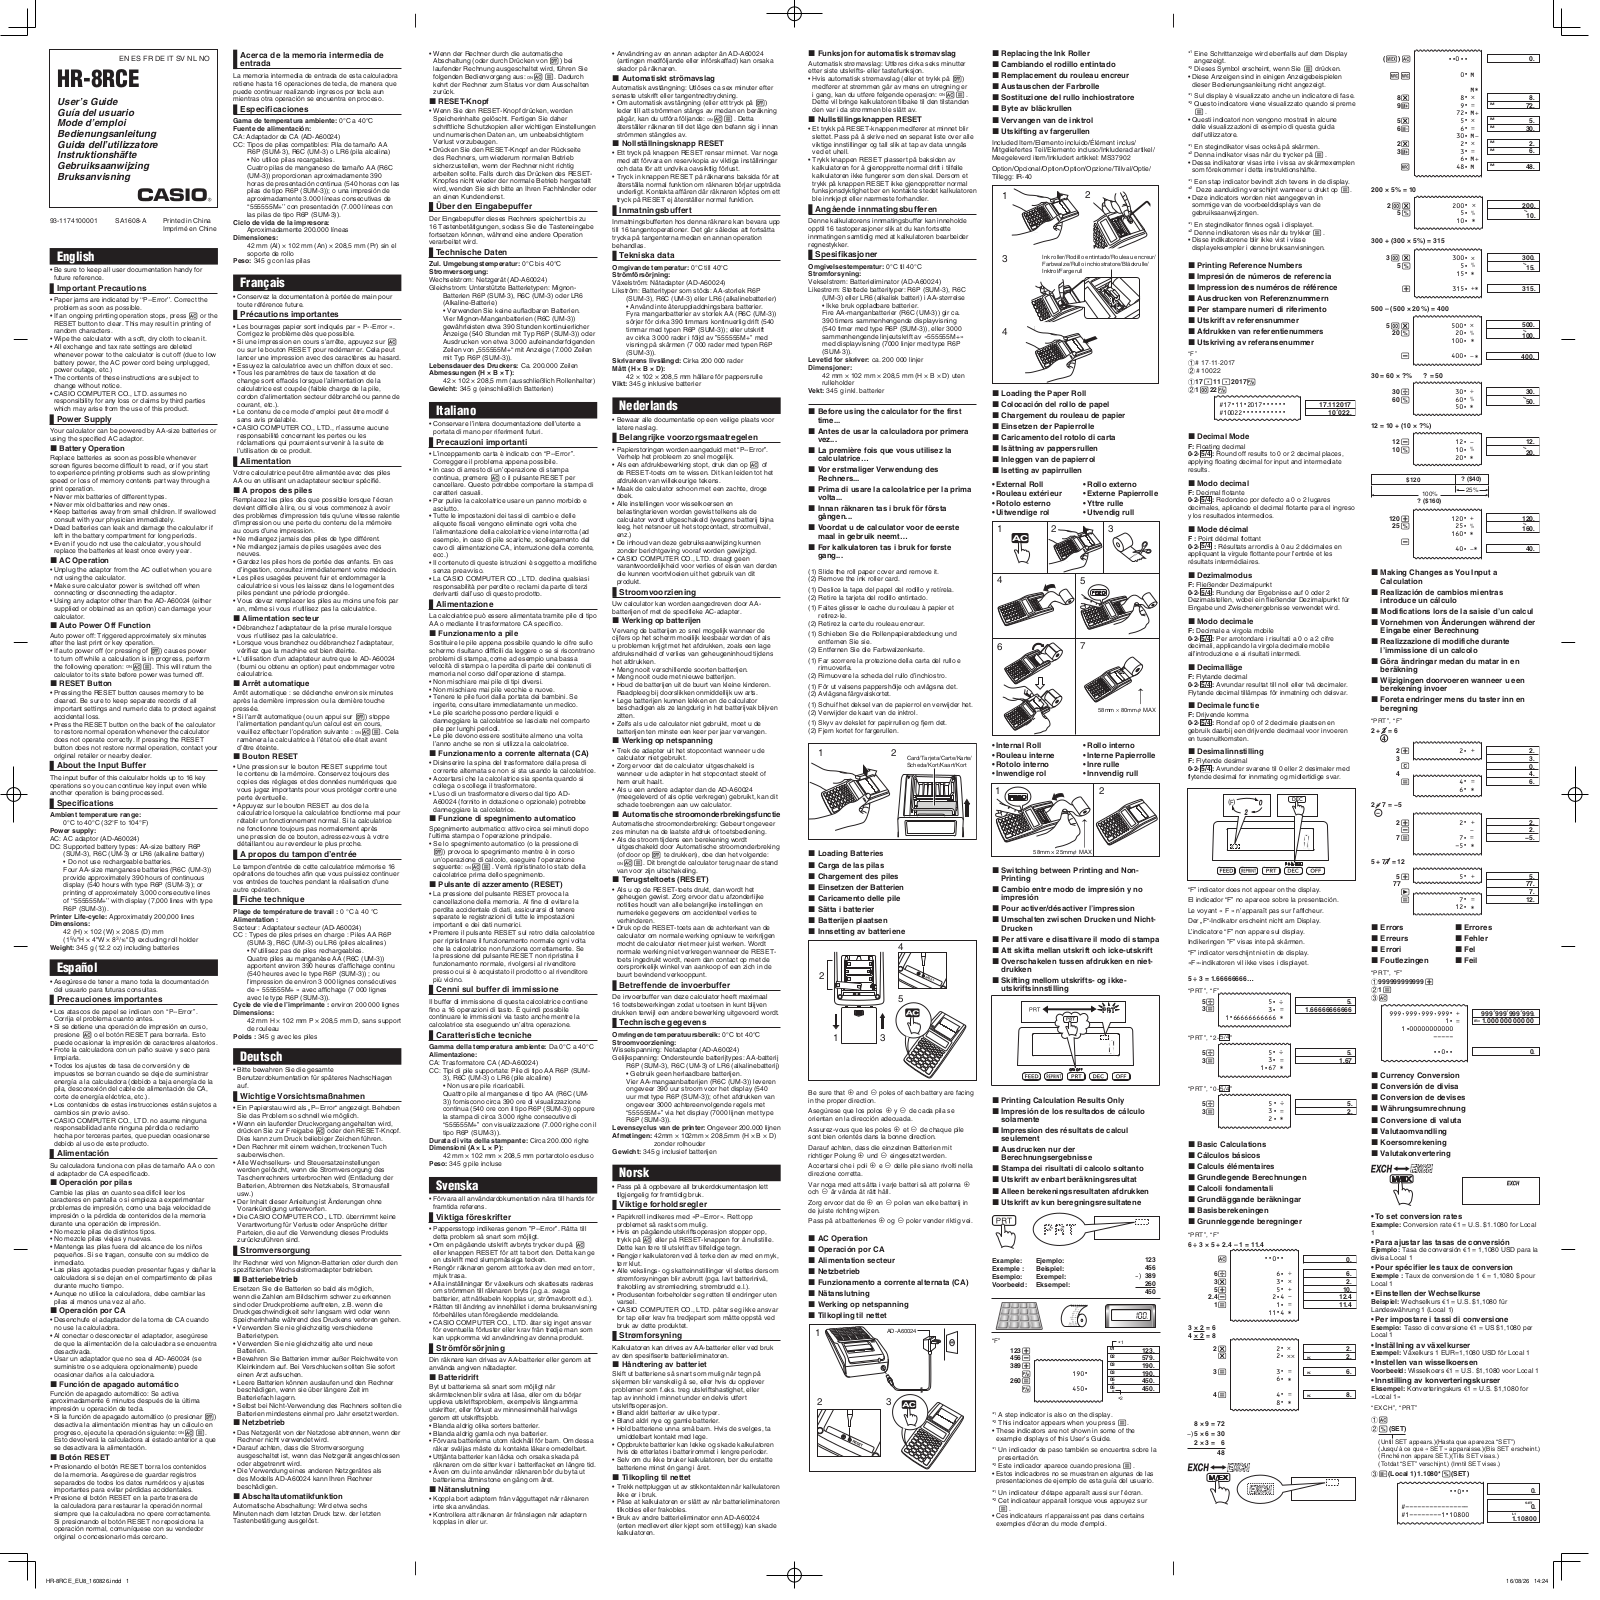 Casio HR-8RCE User Manual